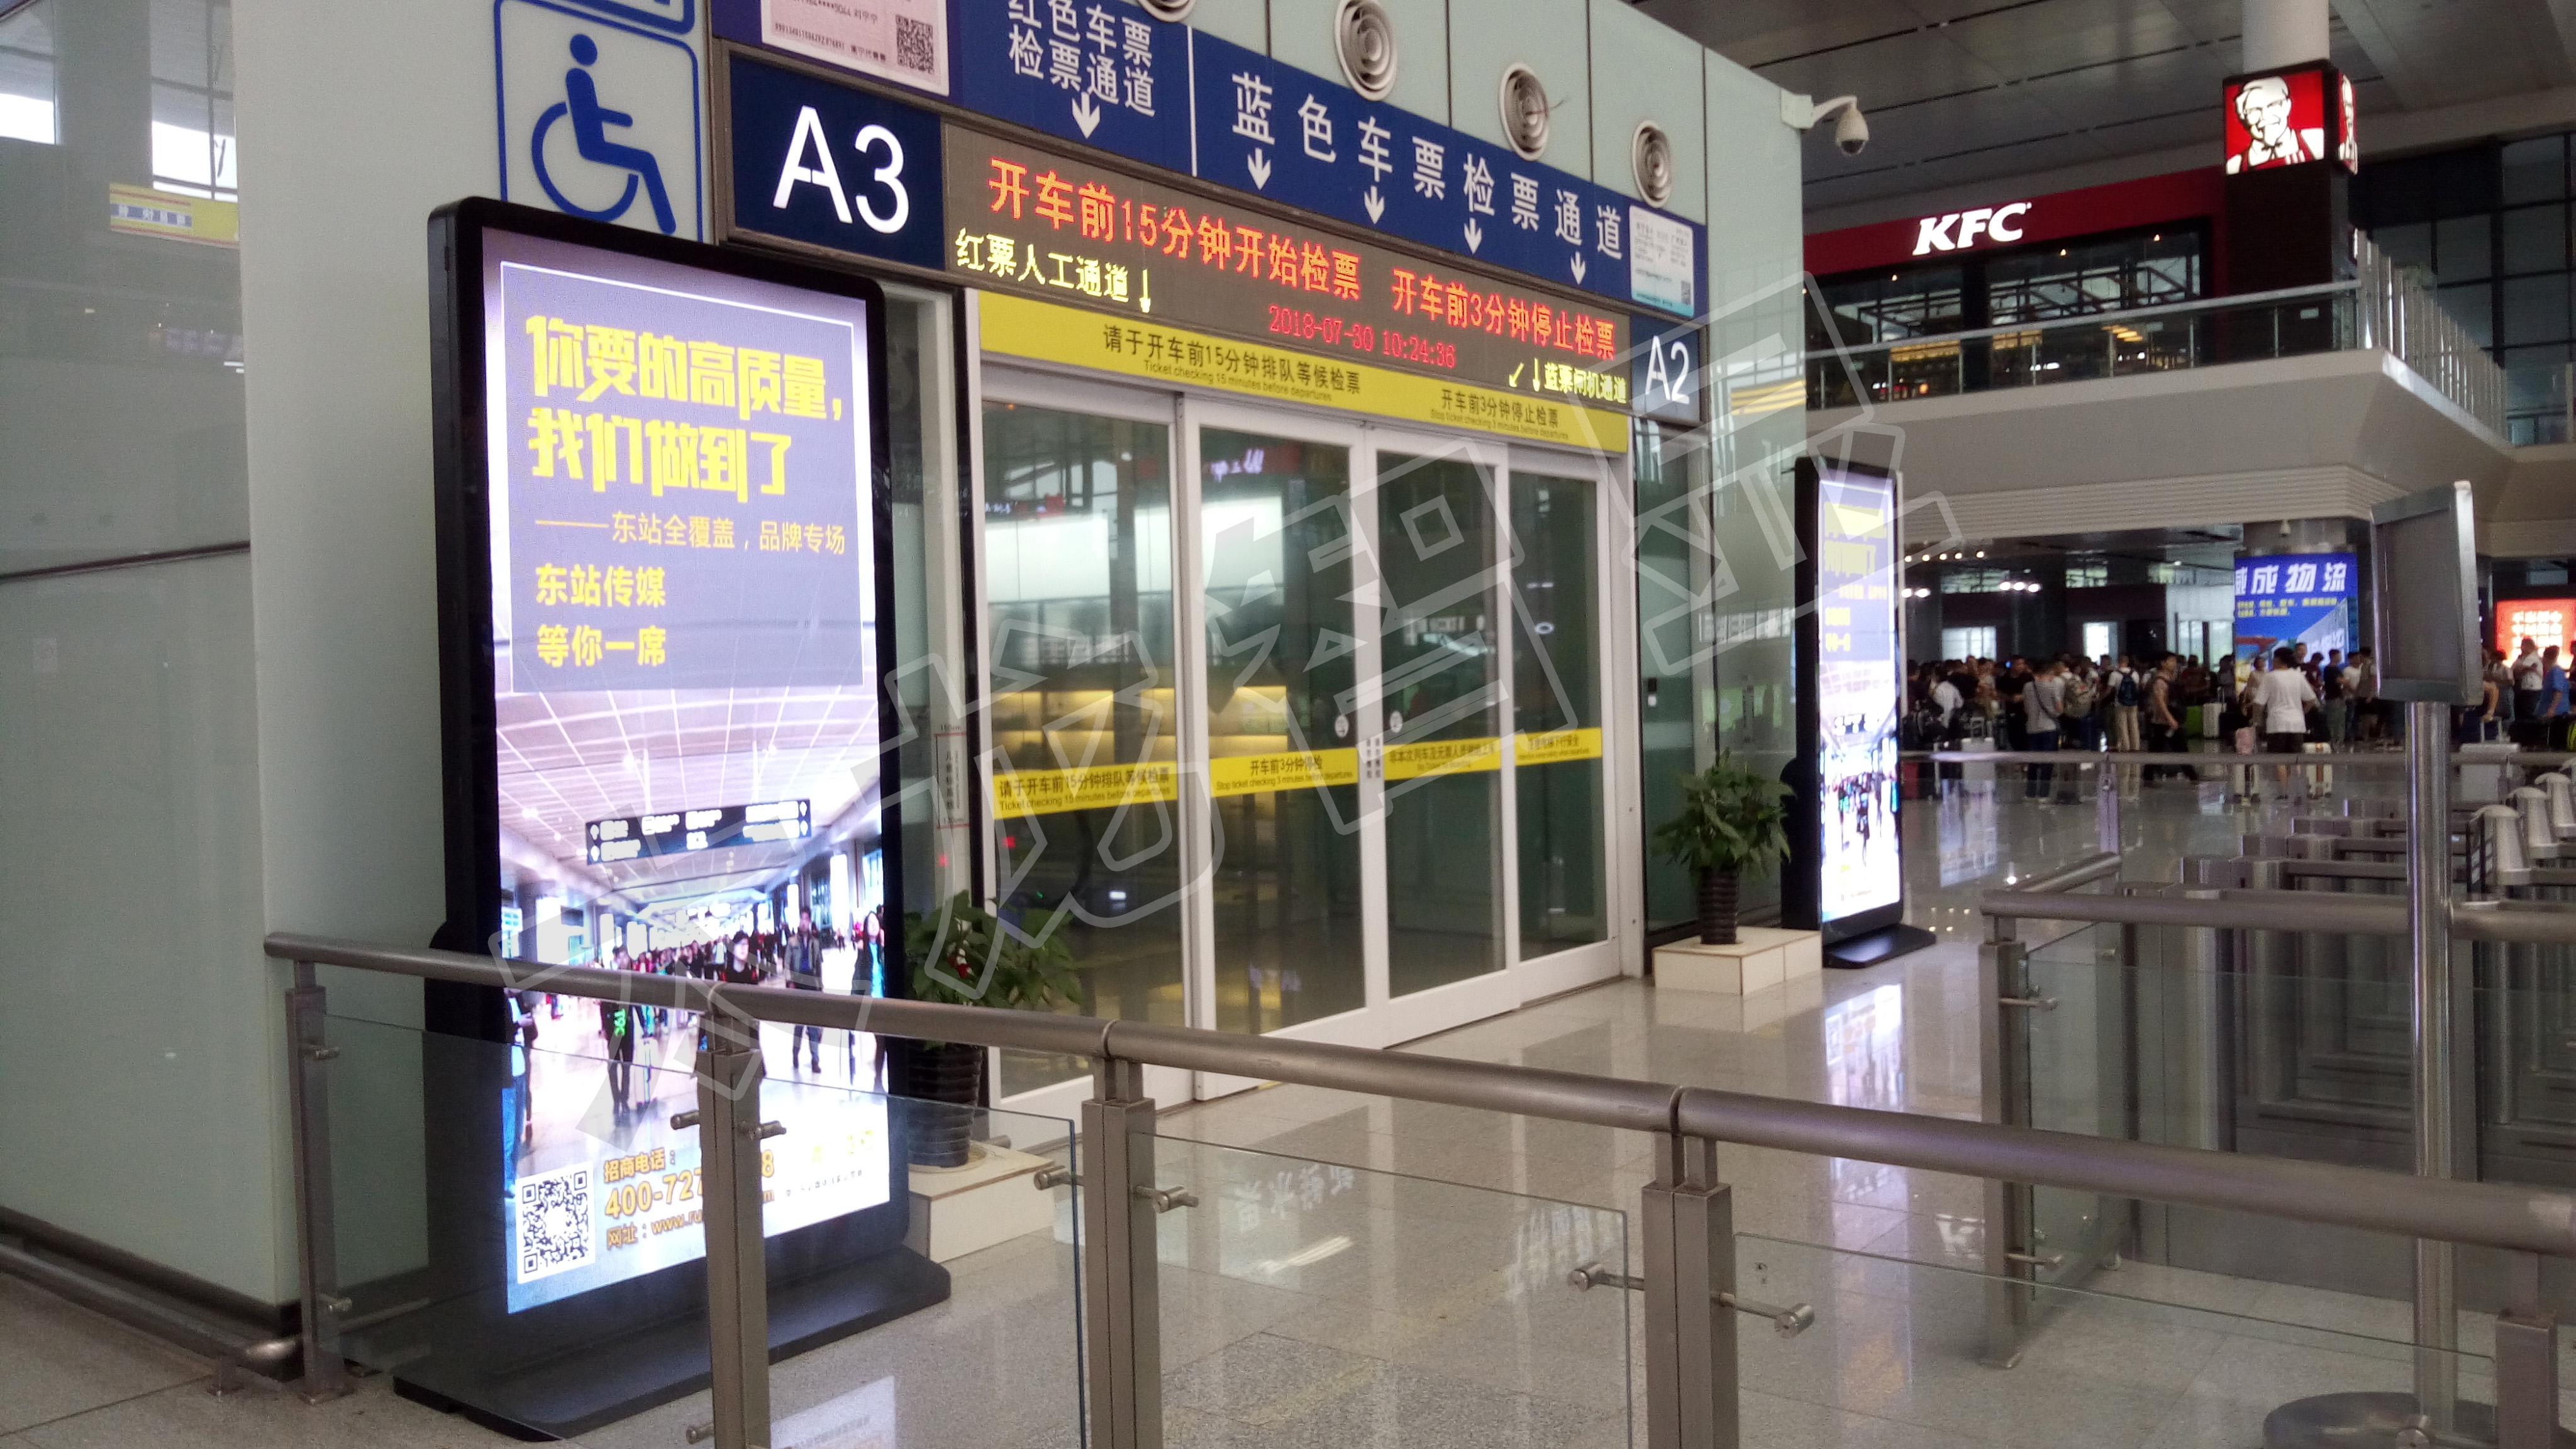 led广告机为南宁高铁站提供高清显示助力